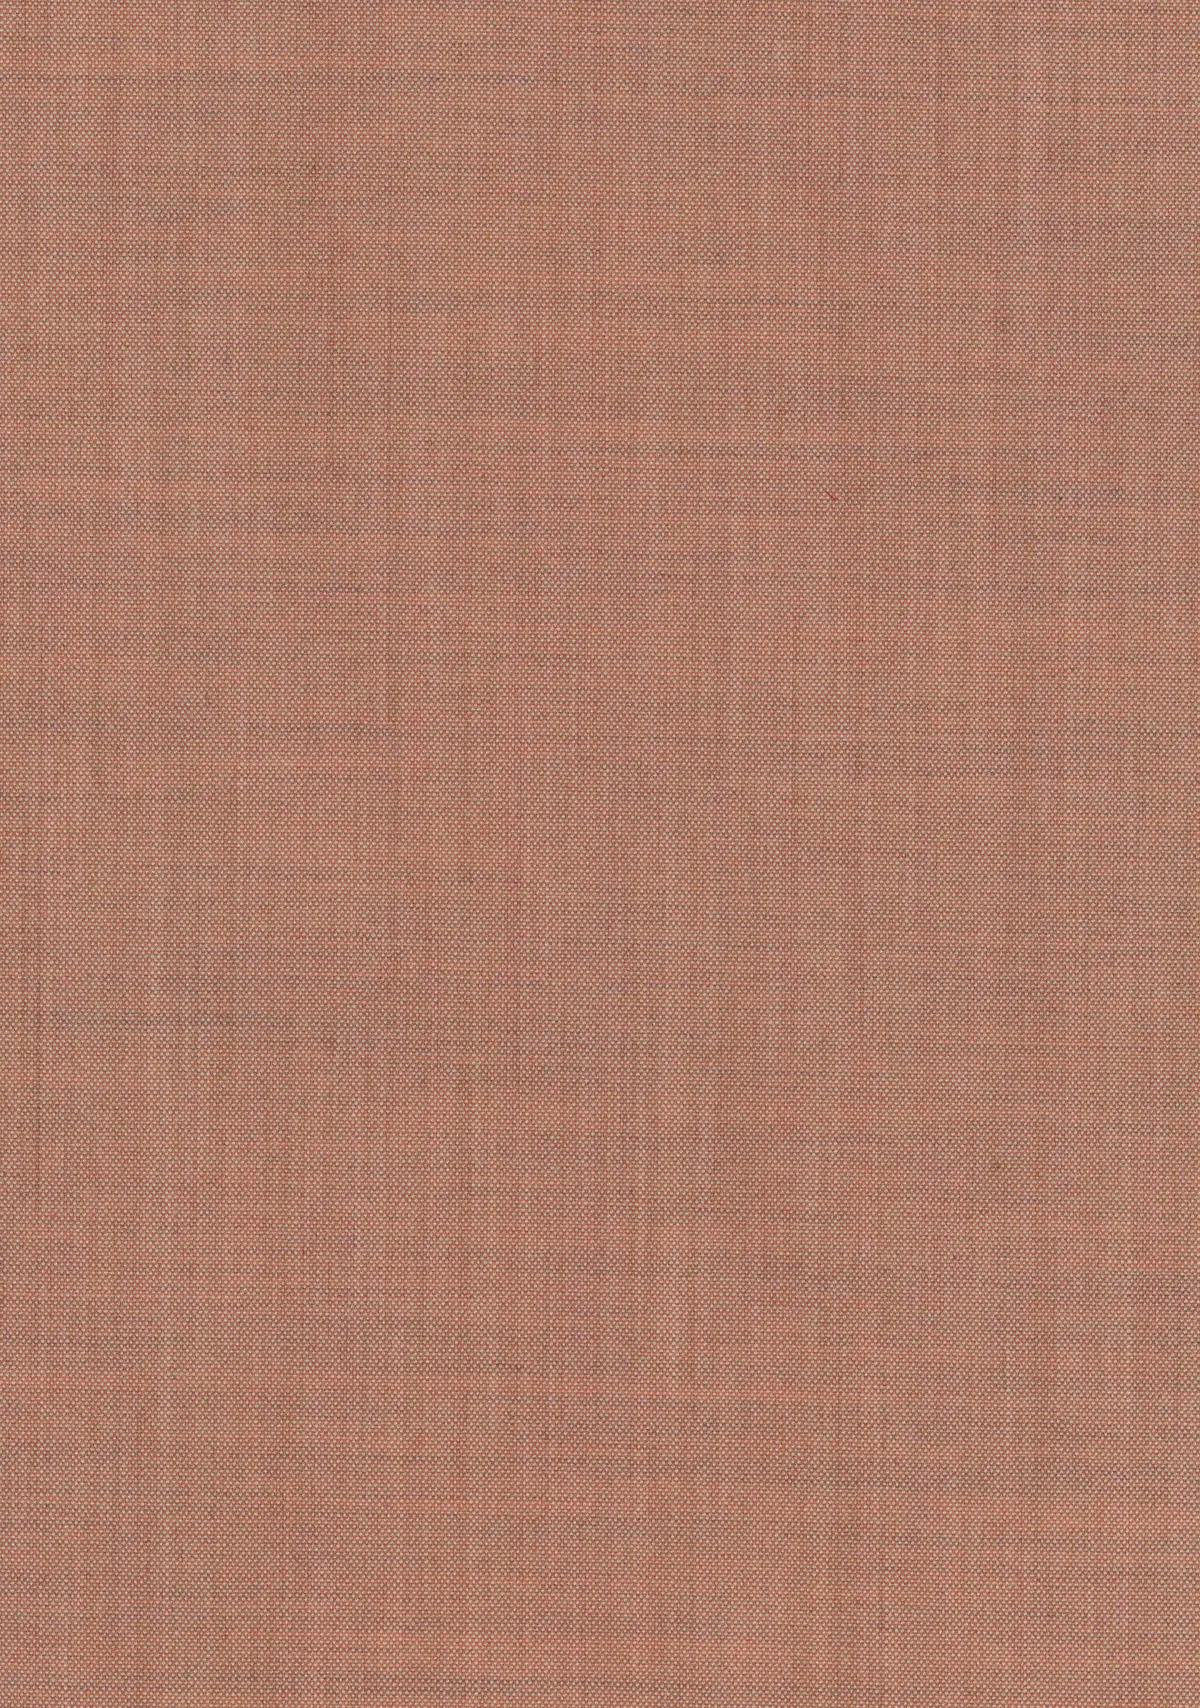 Fabric sample Remix 3 612 orange